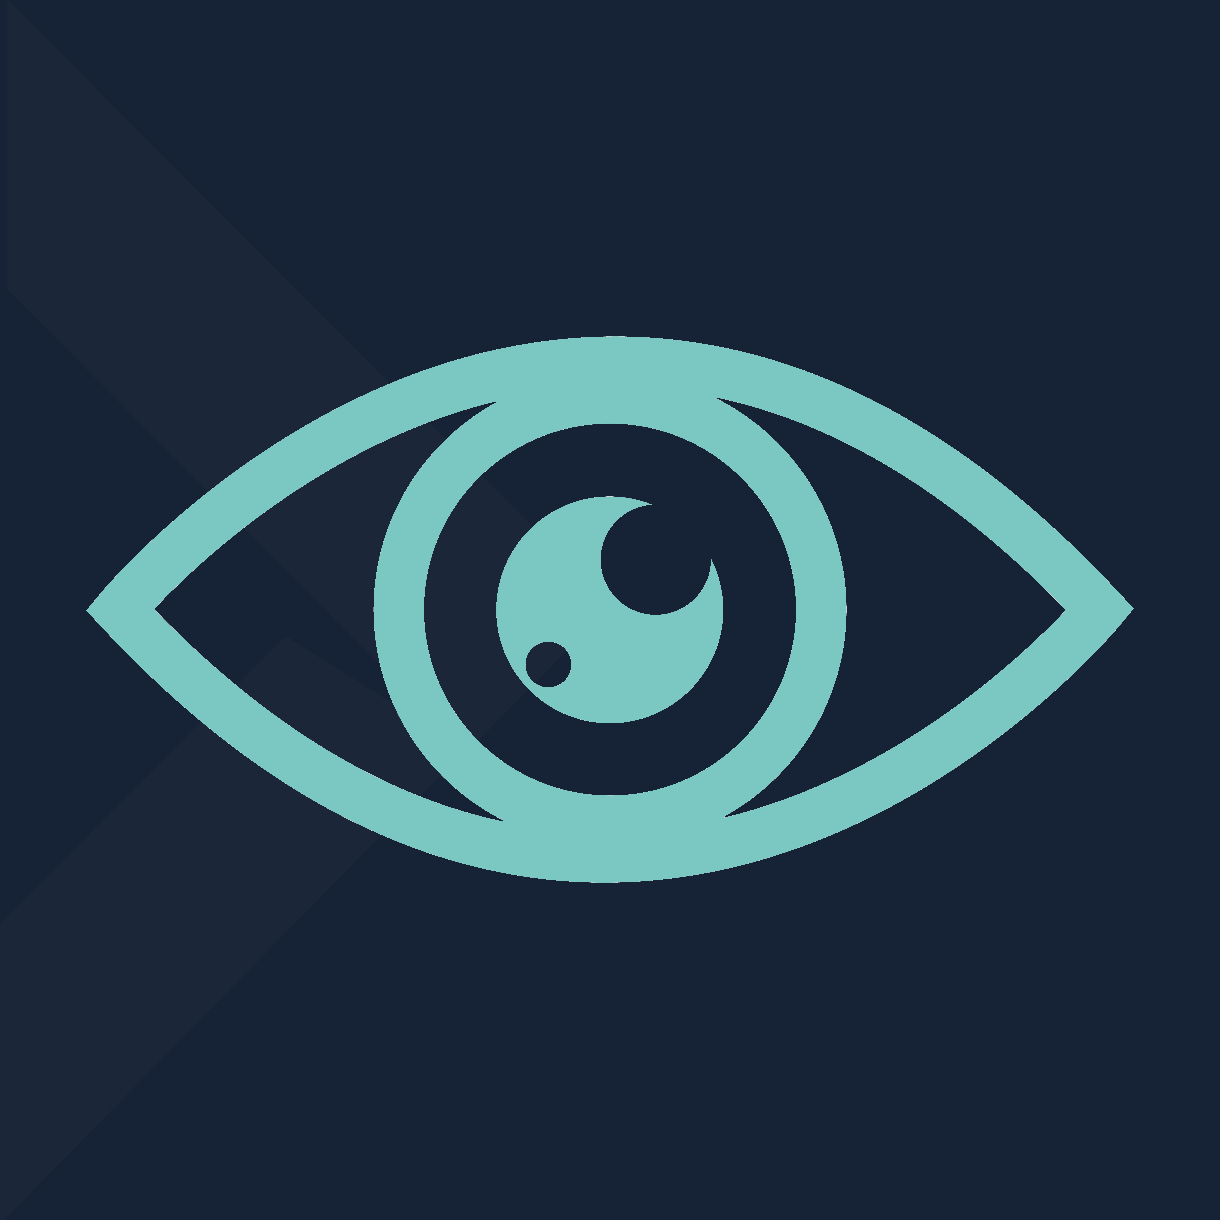 Eye illustration representing buyer awareness